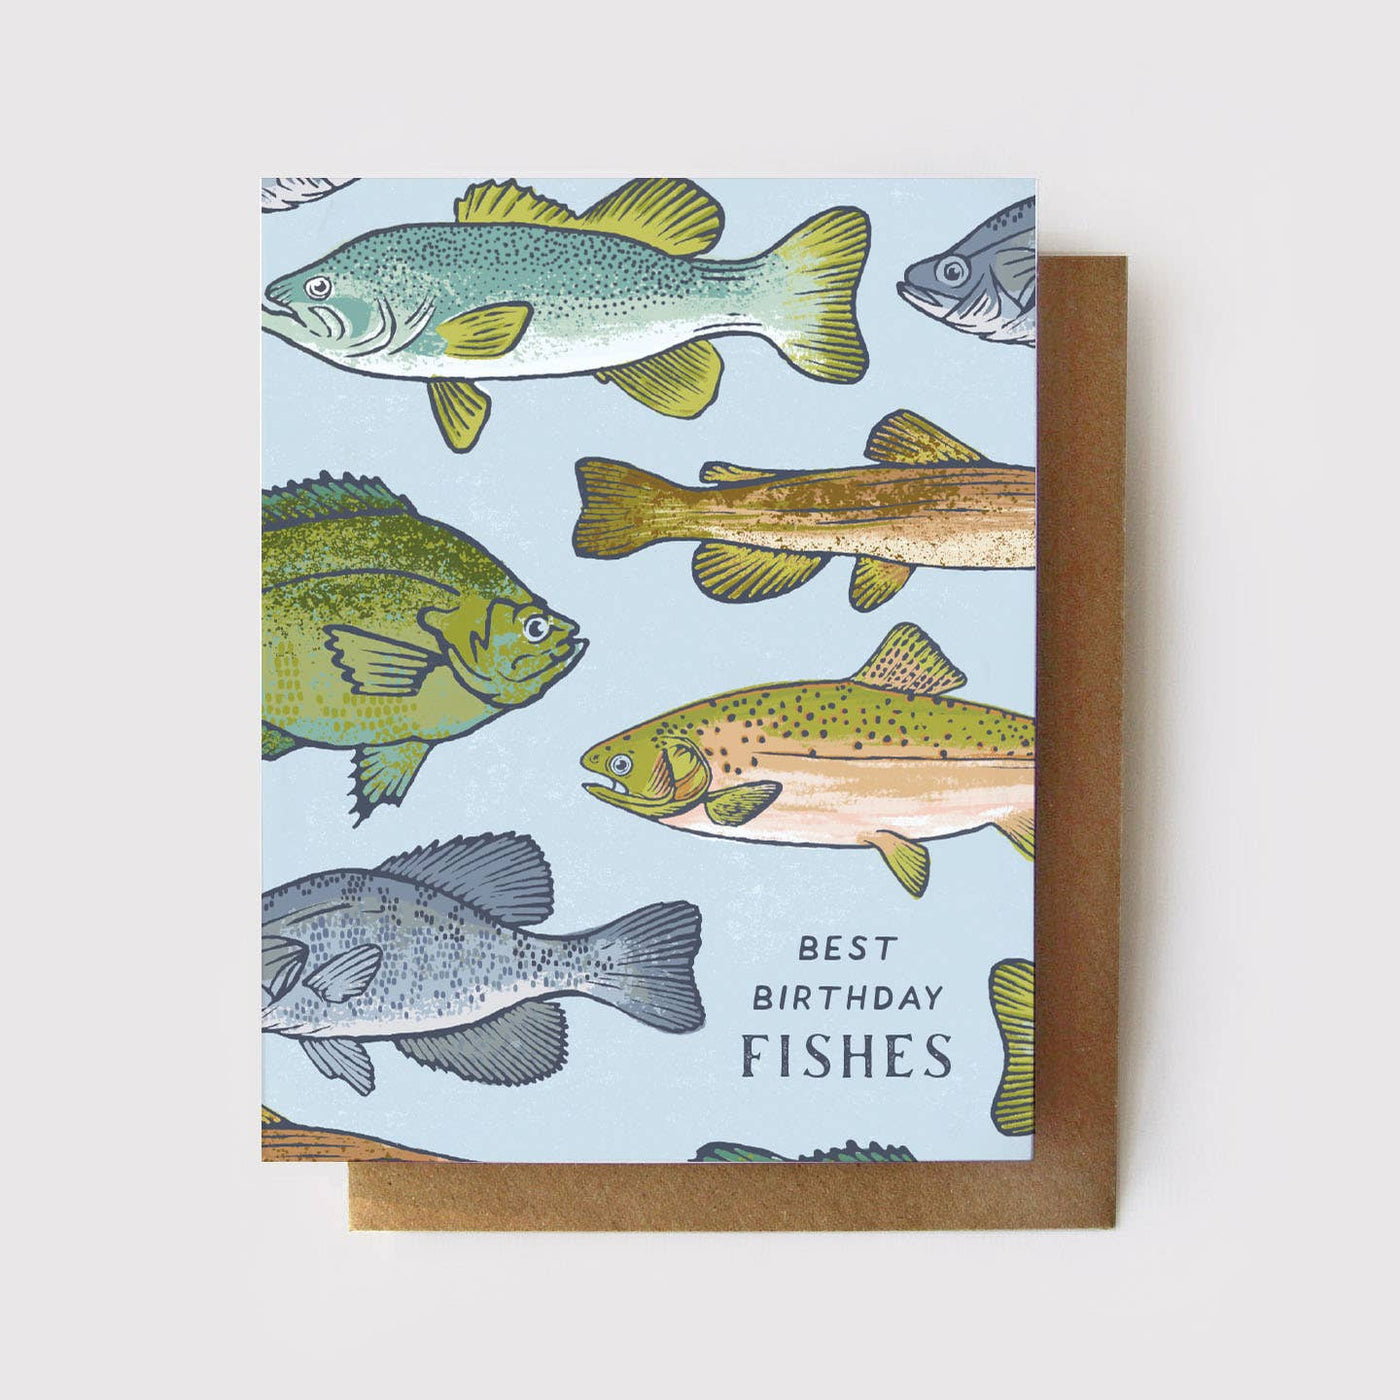 Best Birthday Fishes - Freshwater Fish